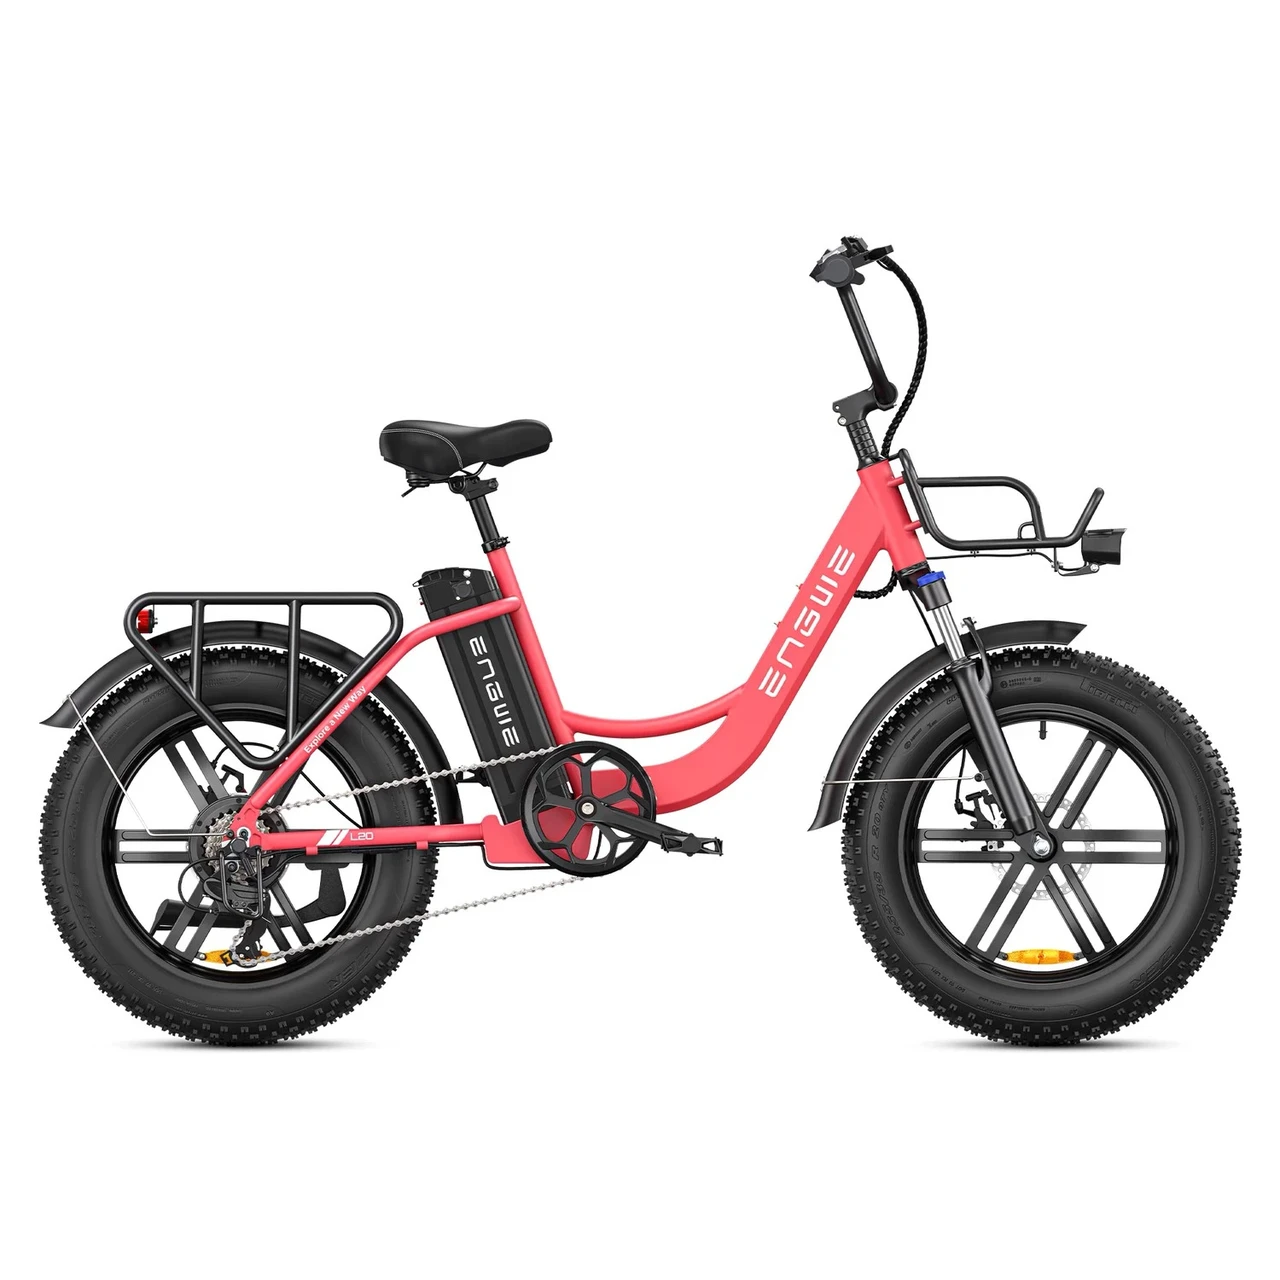 Електровелосипед ENGWE L20